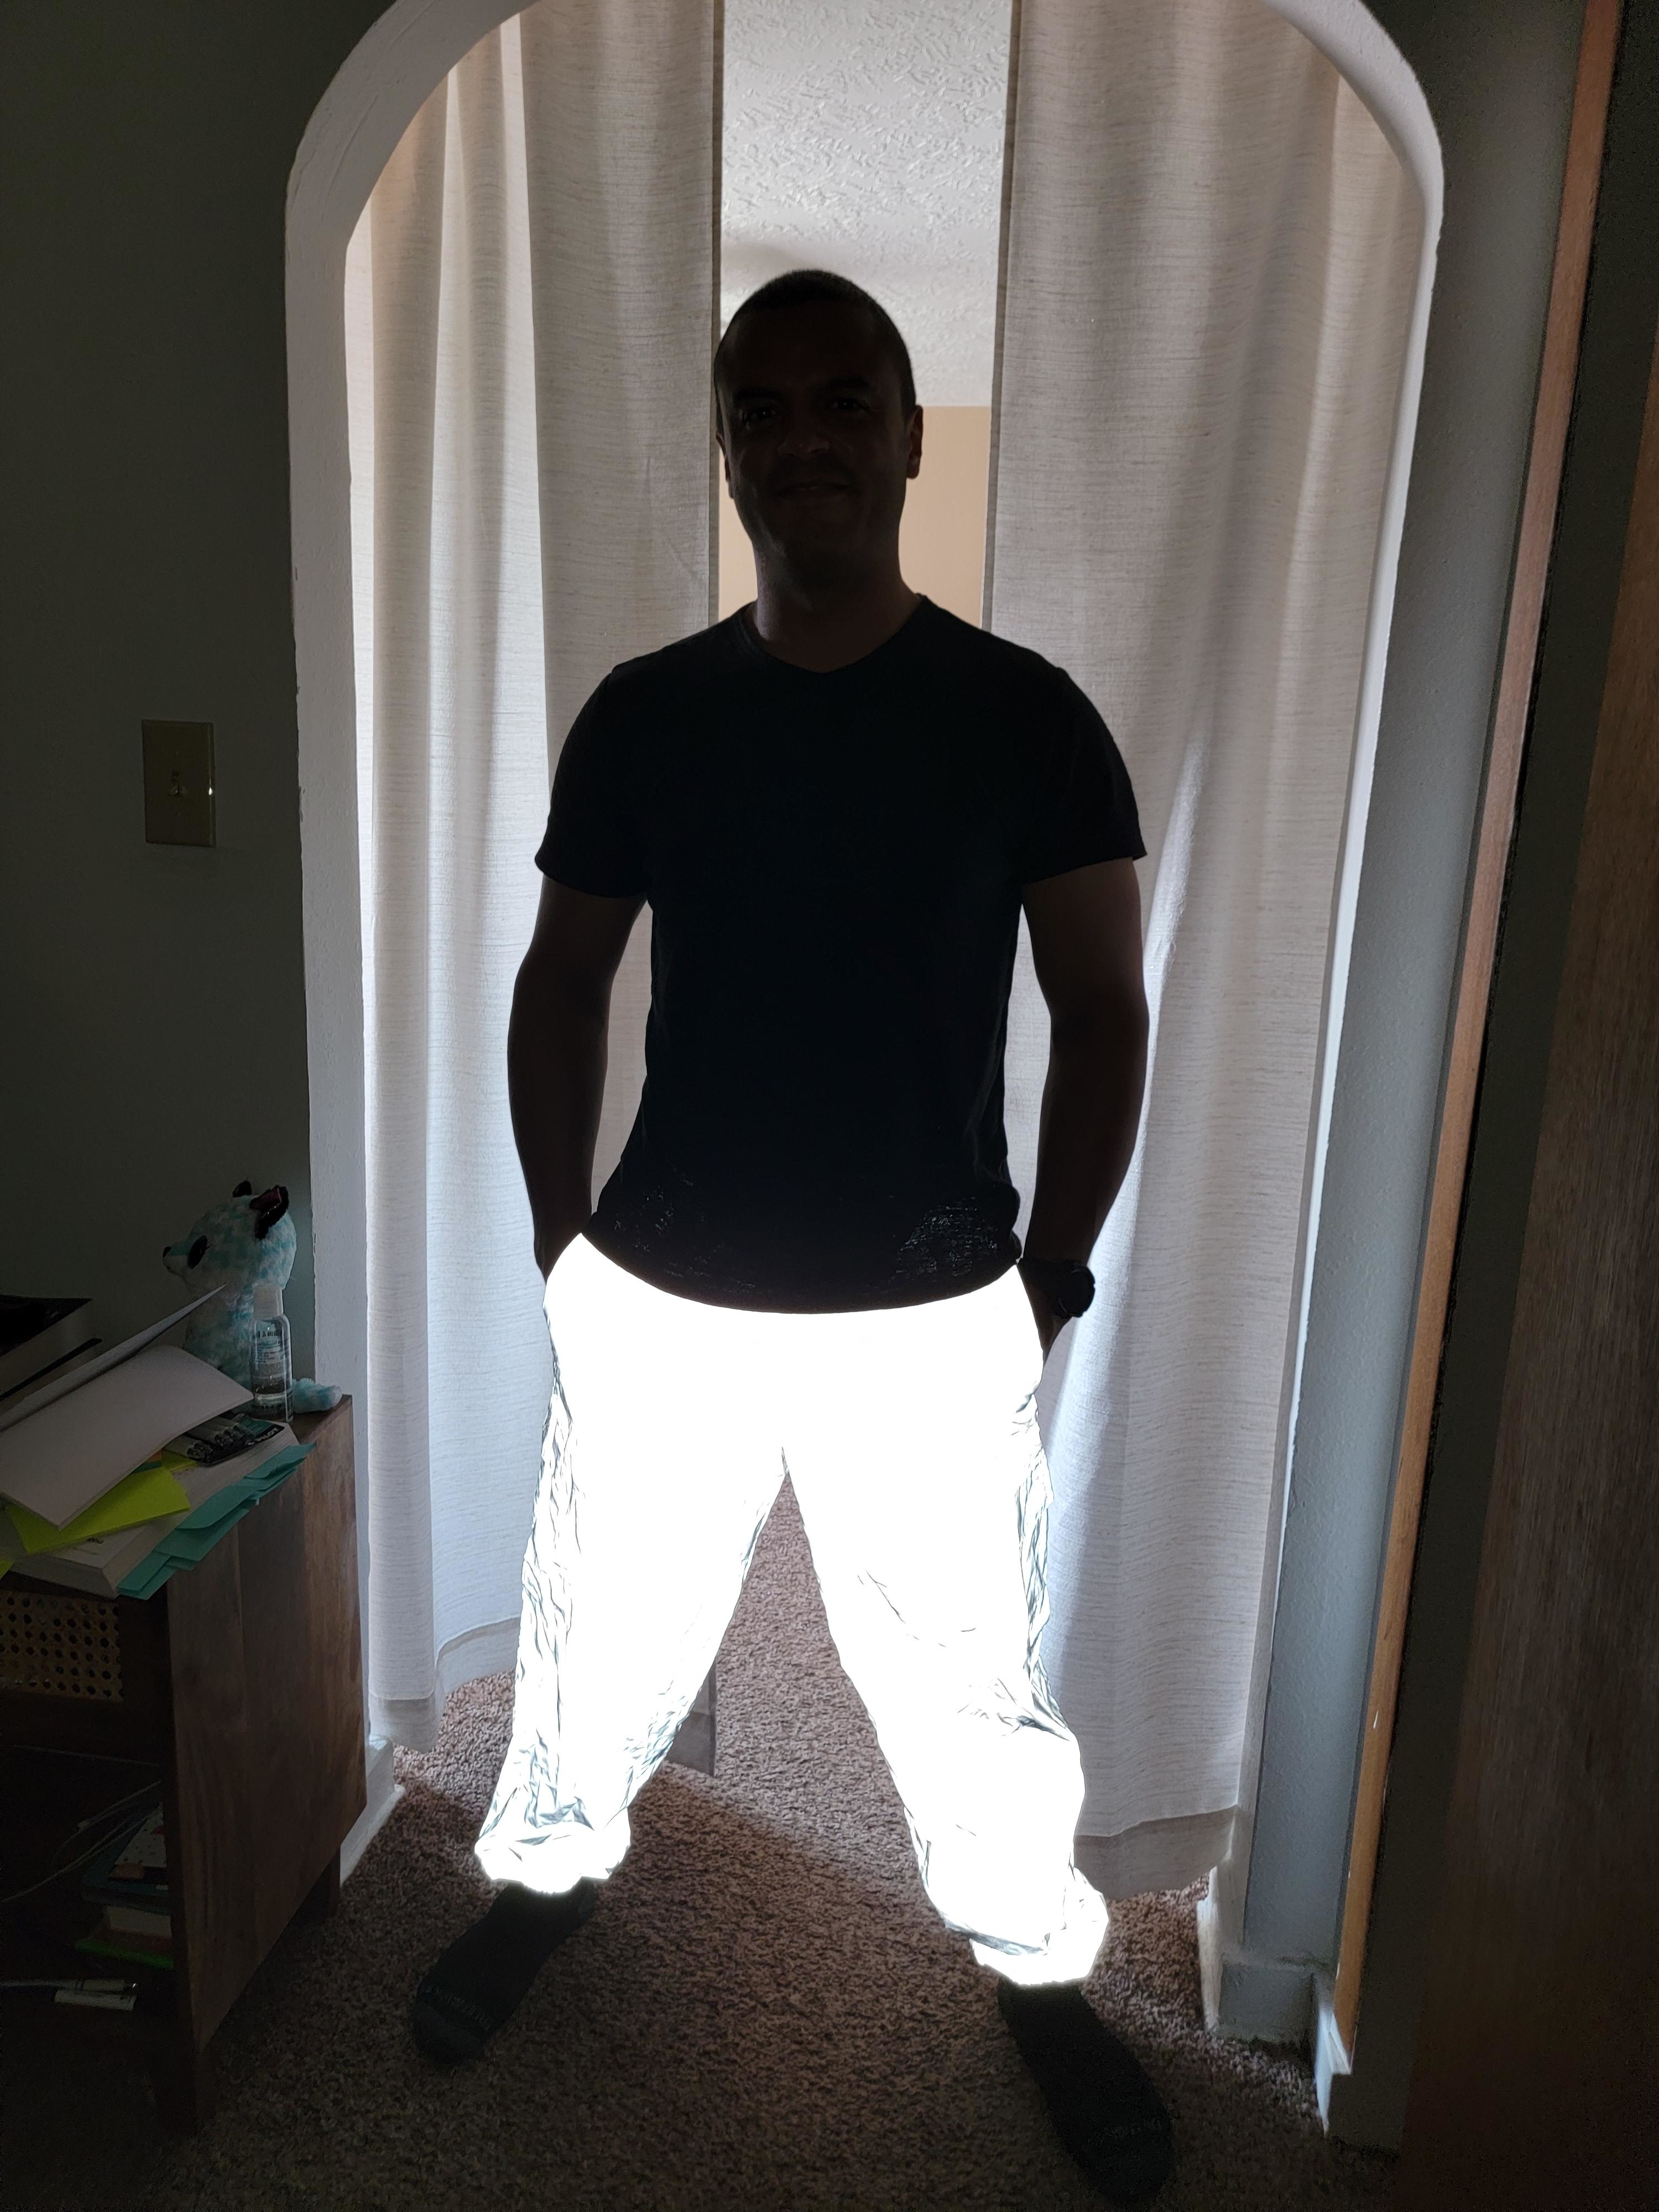 A man in shadows wearing luminous pants